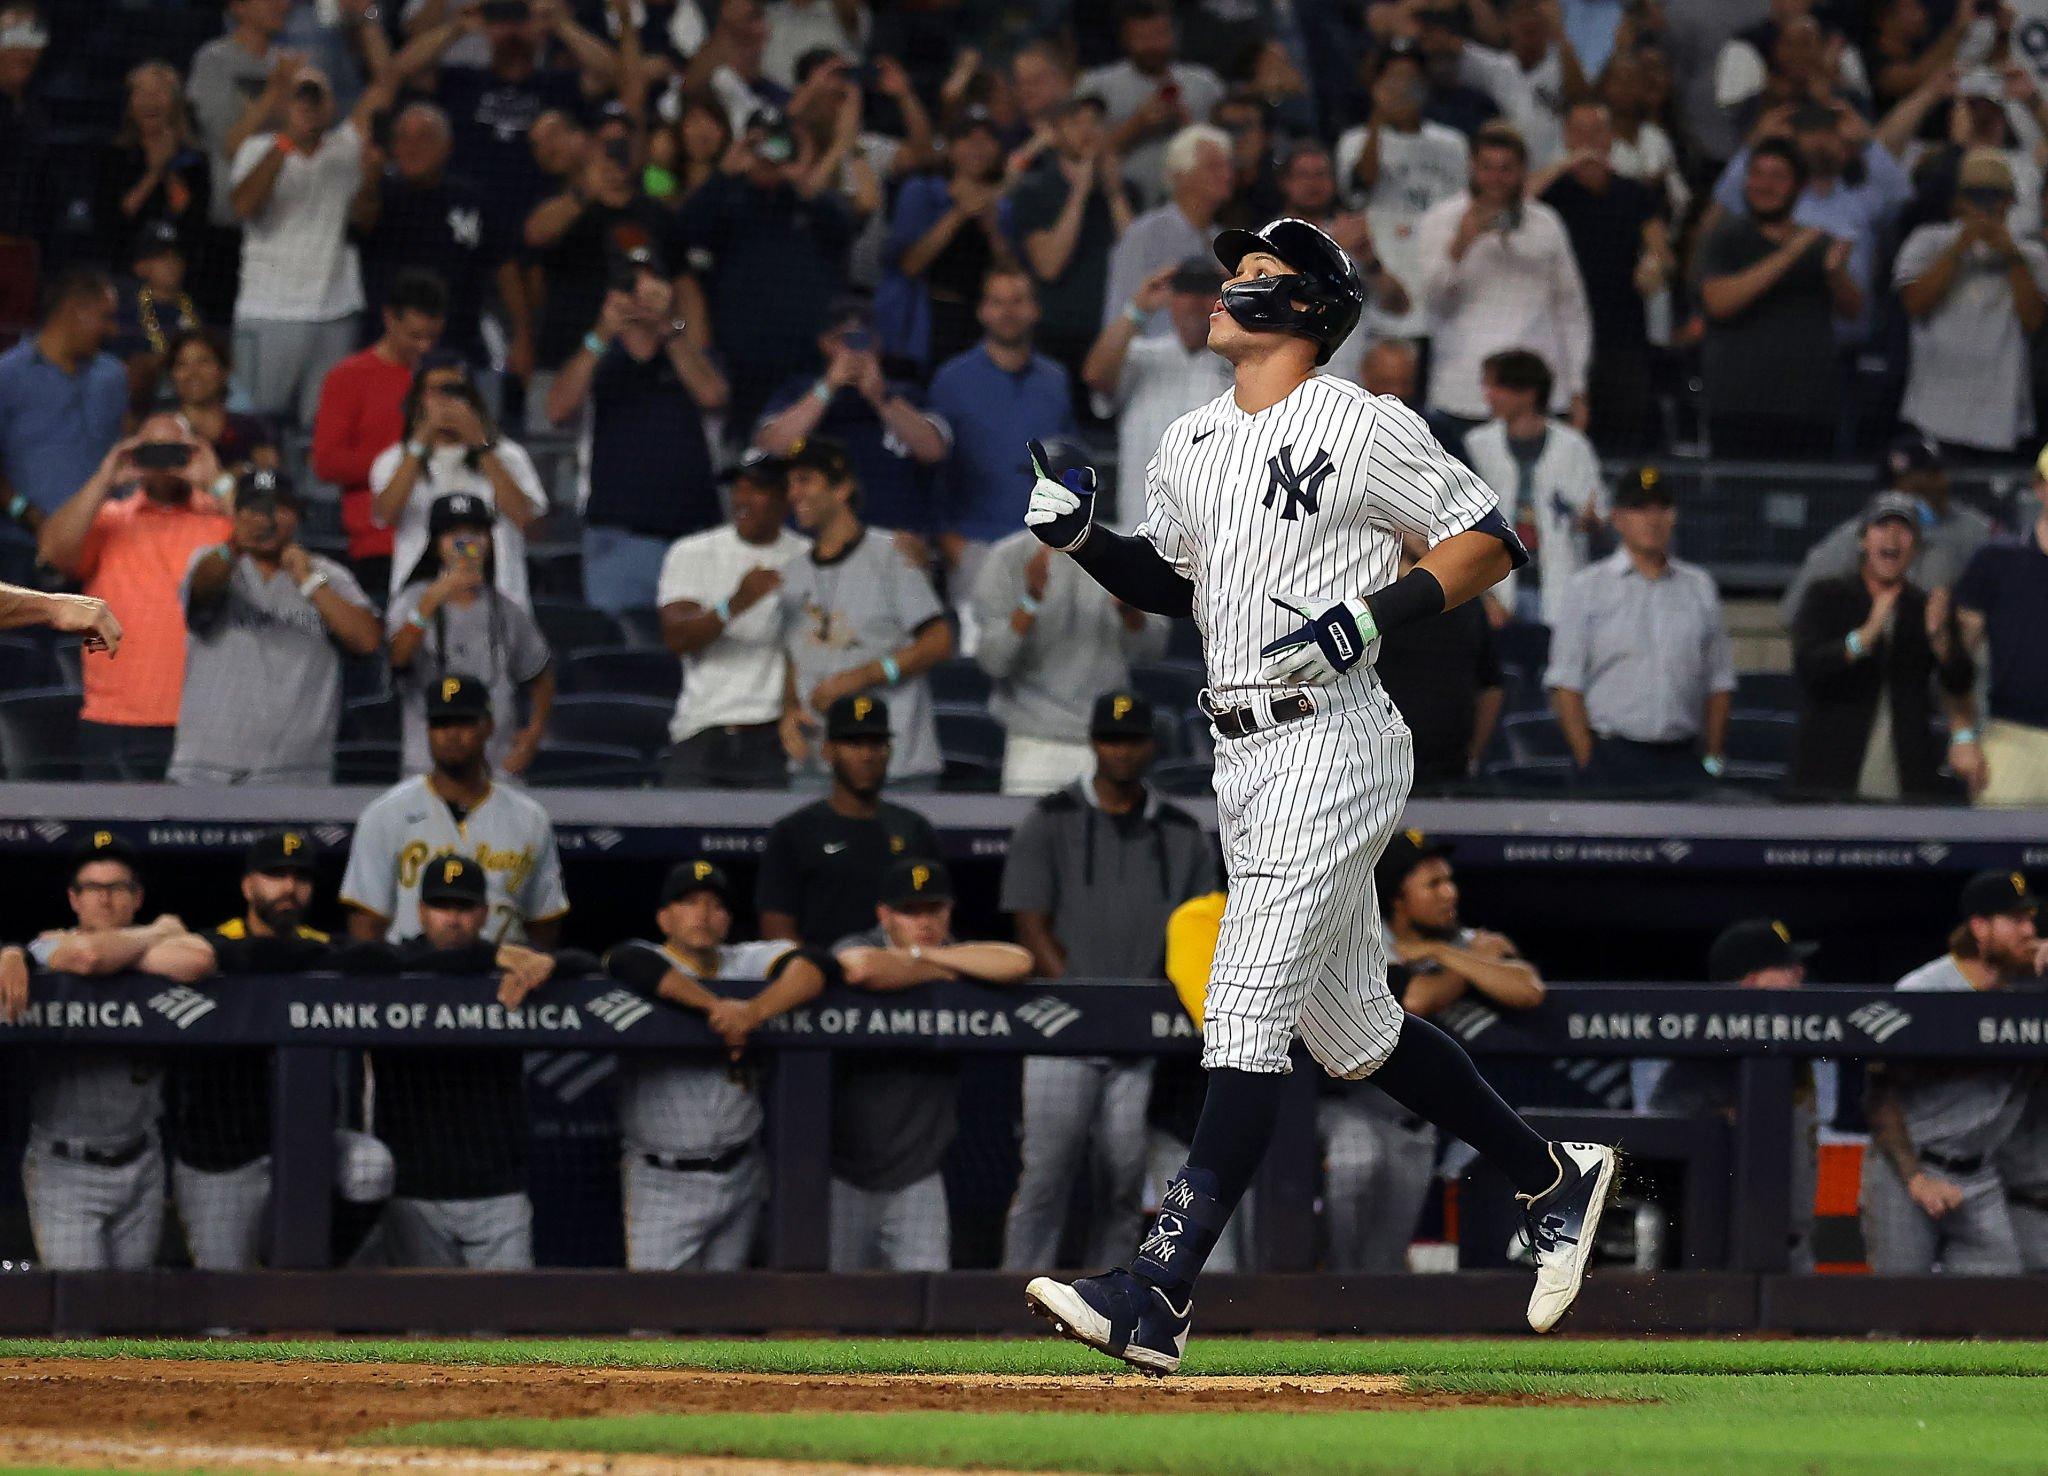 Yankees' Aaron Judge among MLB's best-selling jerseys in 2021 season 